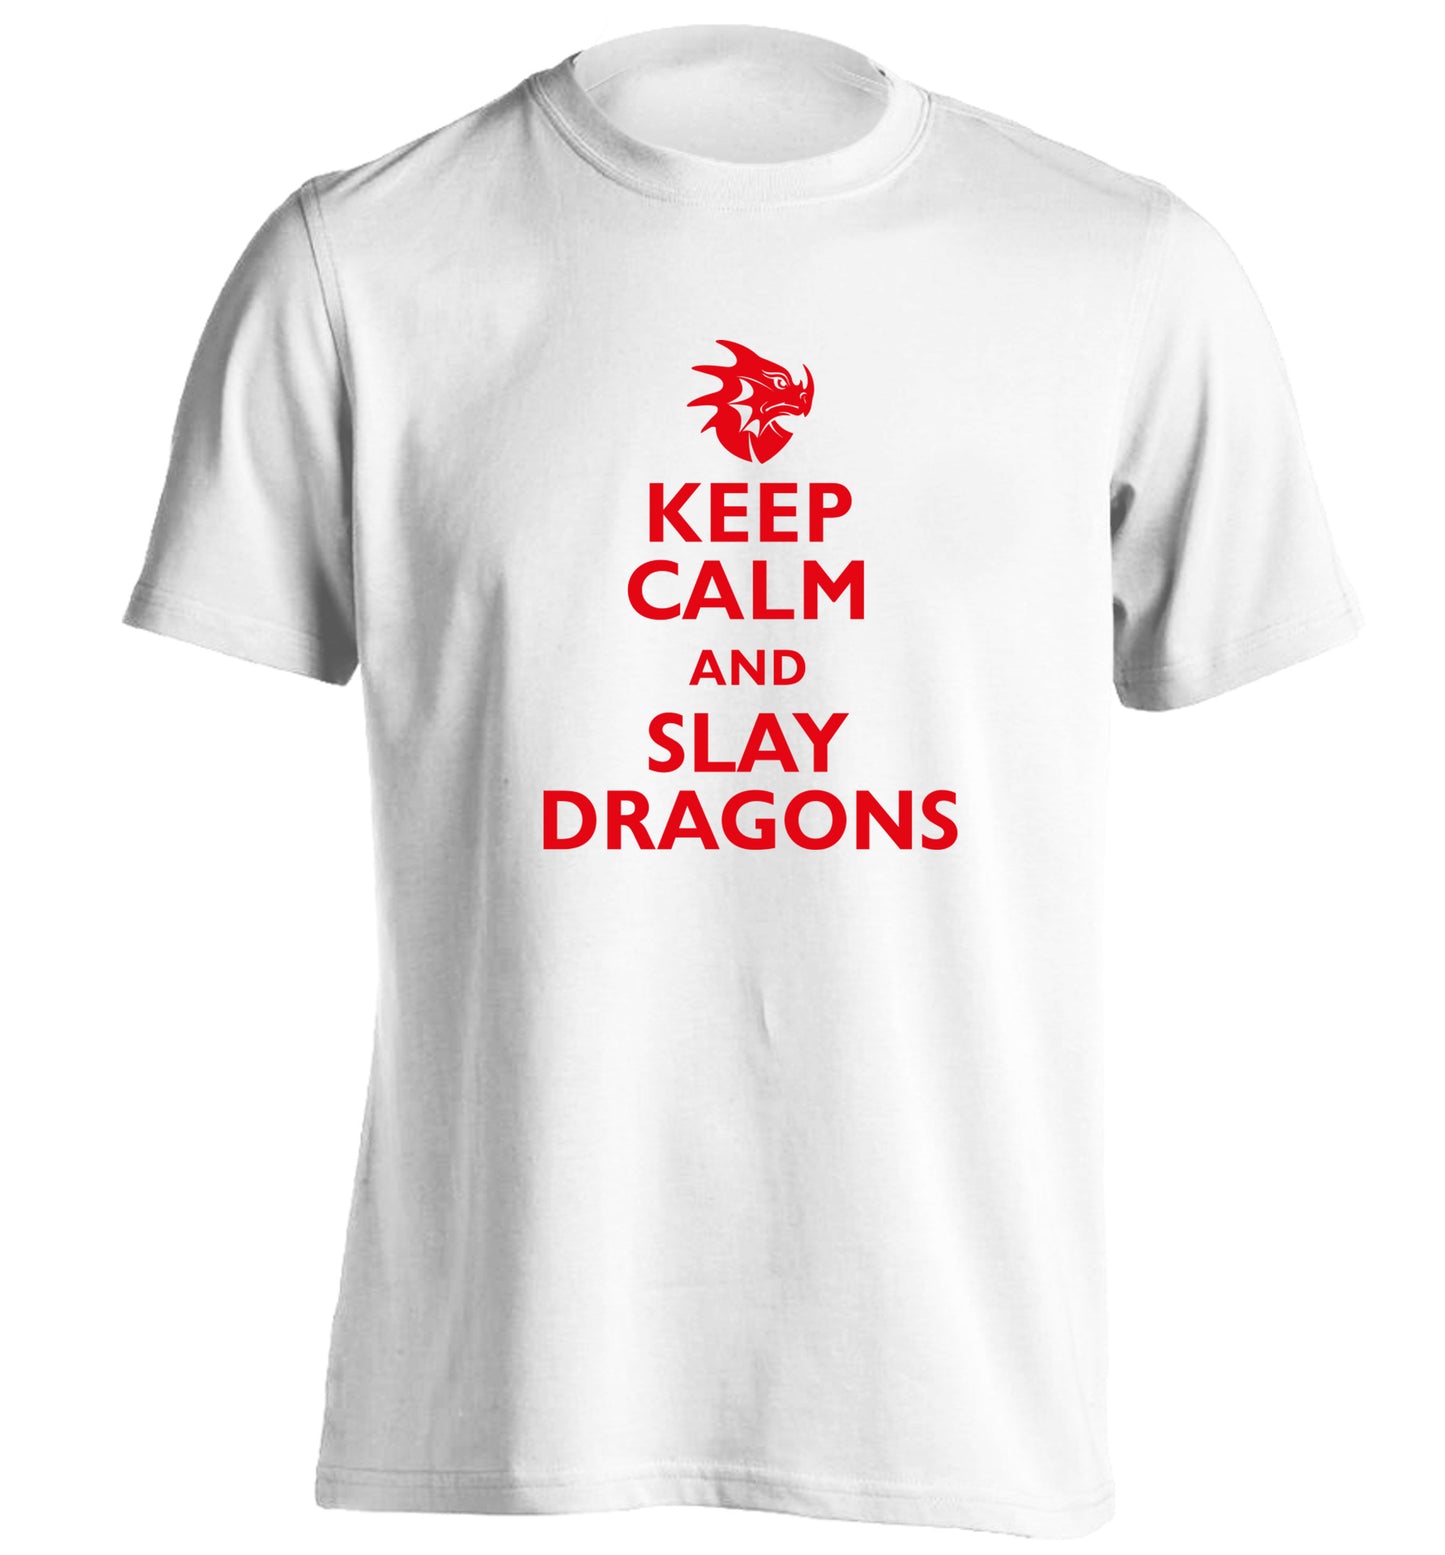 Keep calm and slay dragons adults unisex white Tshirt 2XL